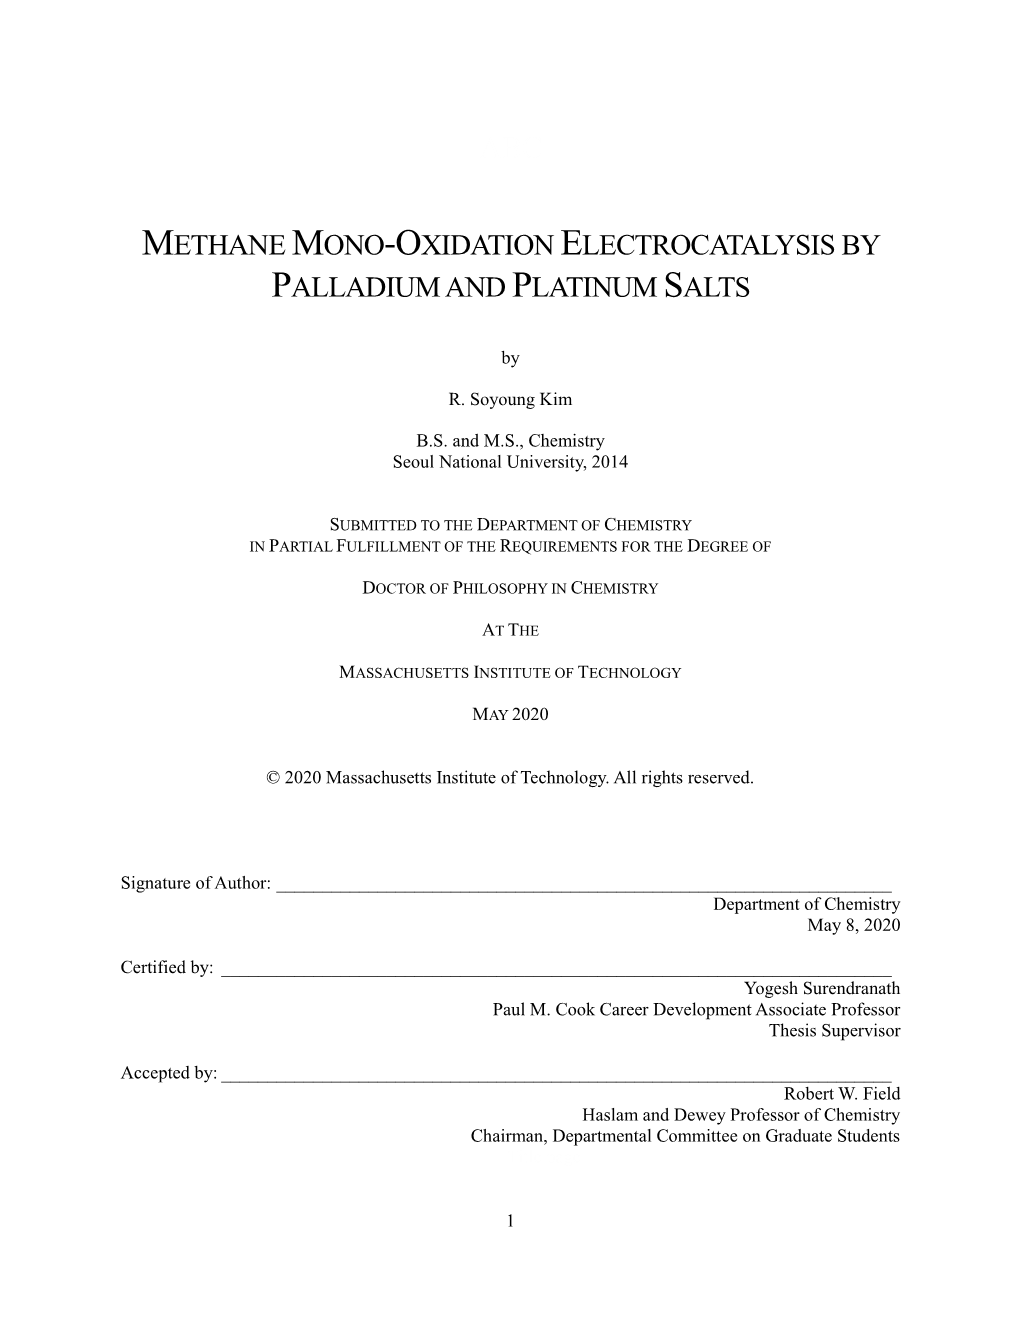 Methane Mono-Oxidation Electrocatalysis by Palladium and Platinum Salts